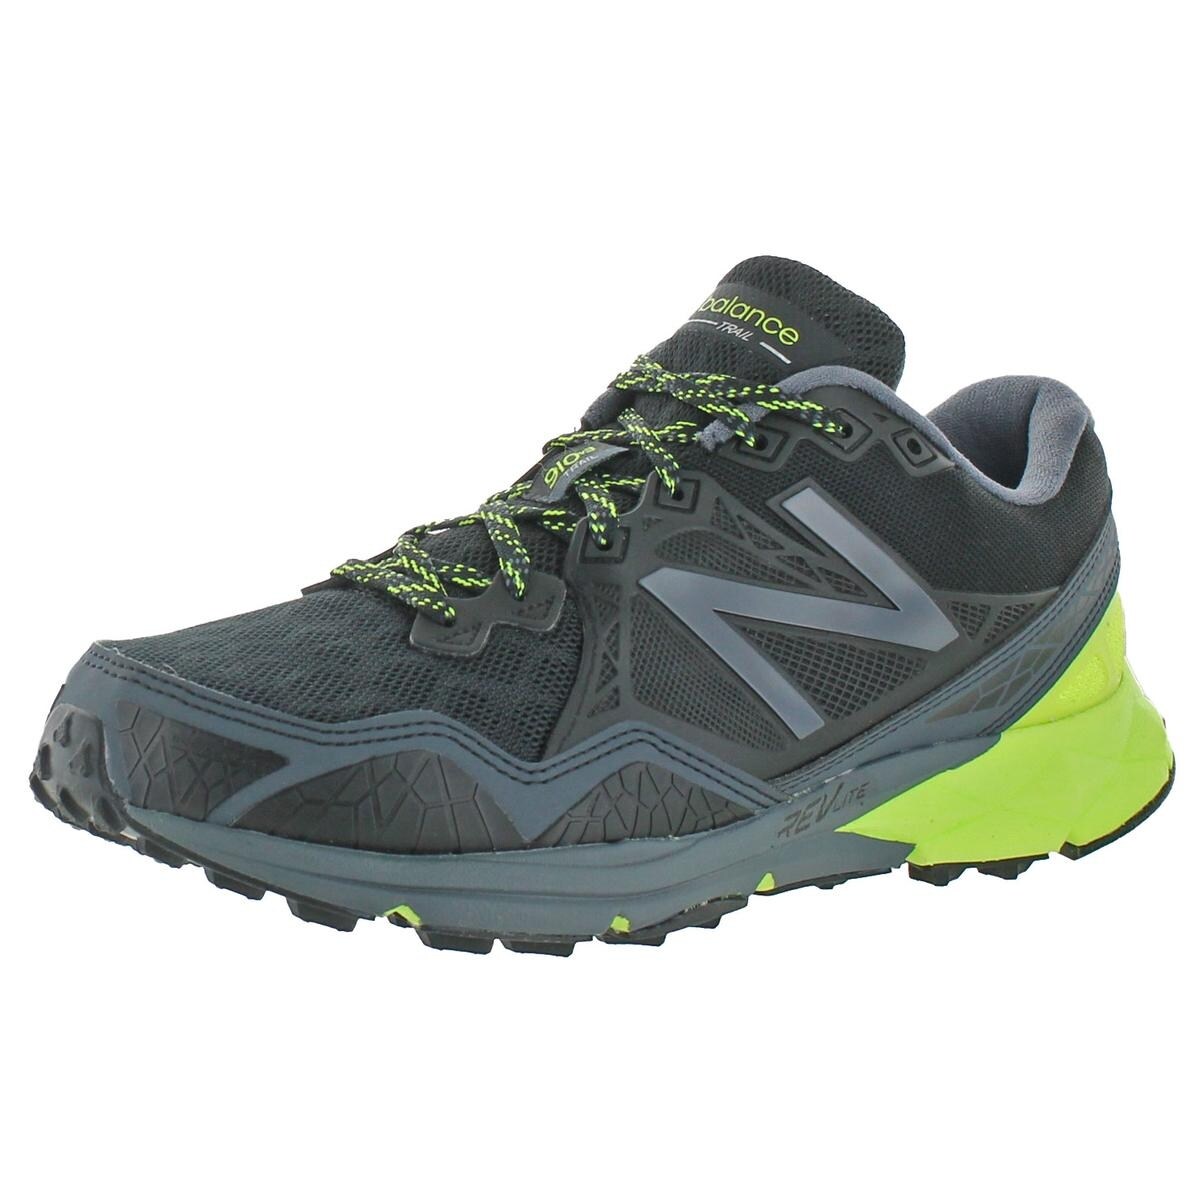 new balance men's shoes 910v3 trail